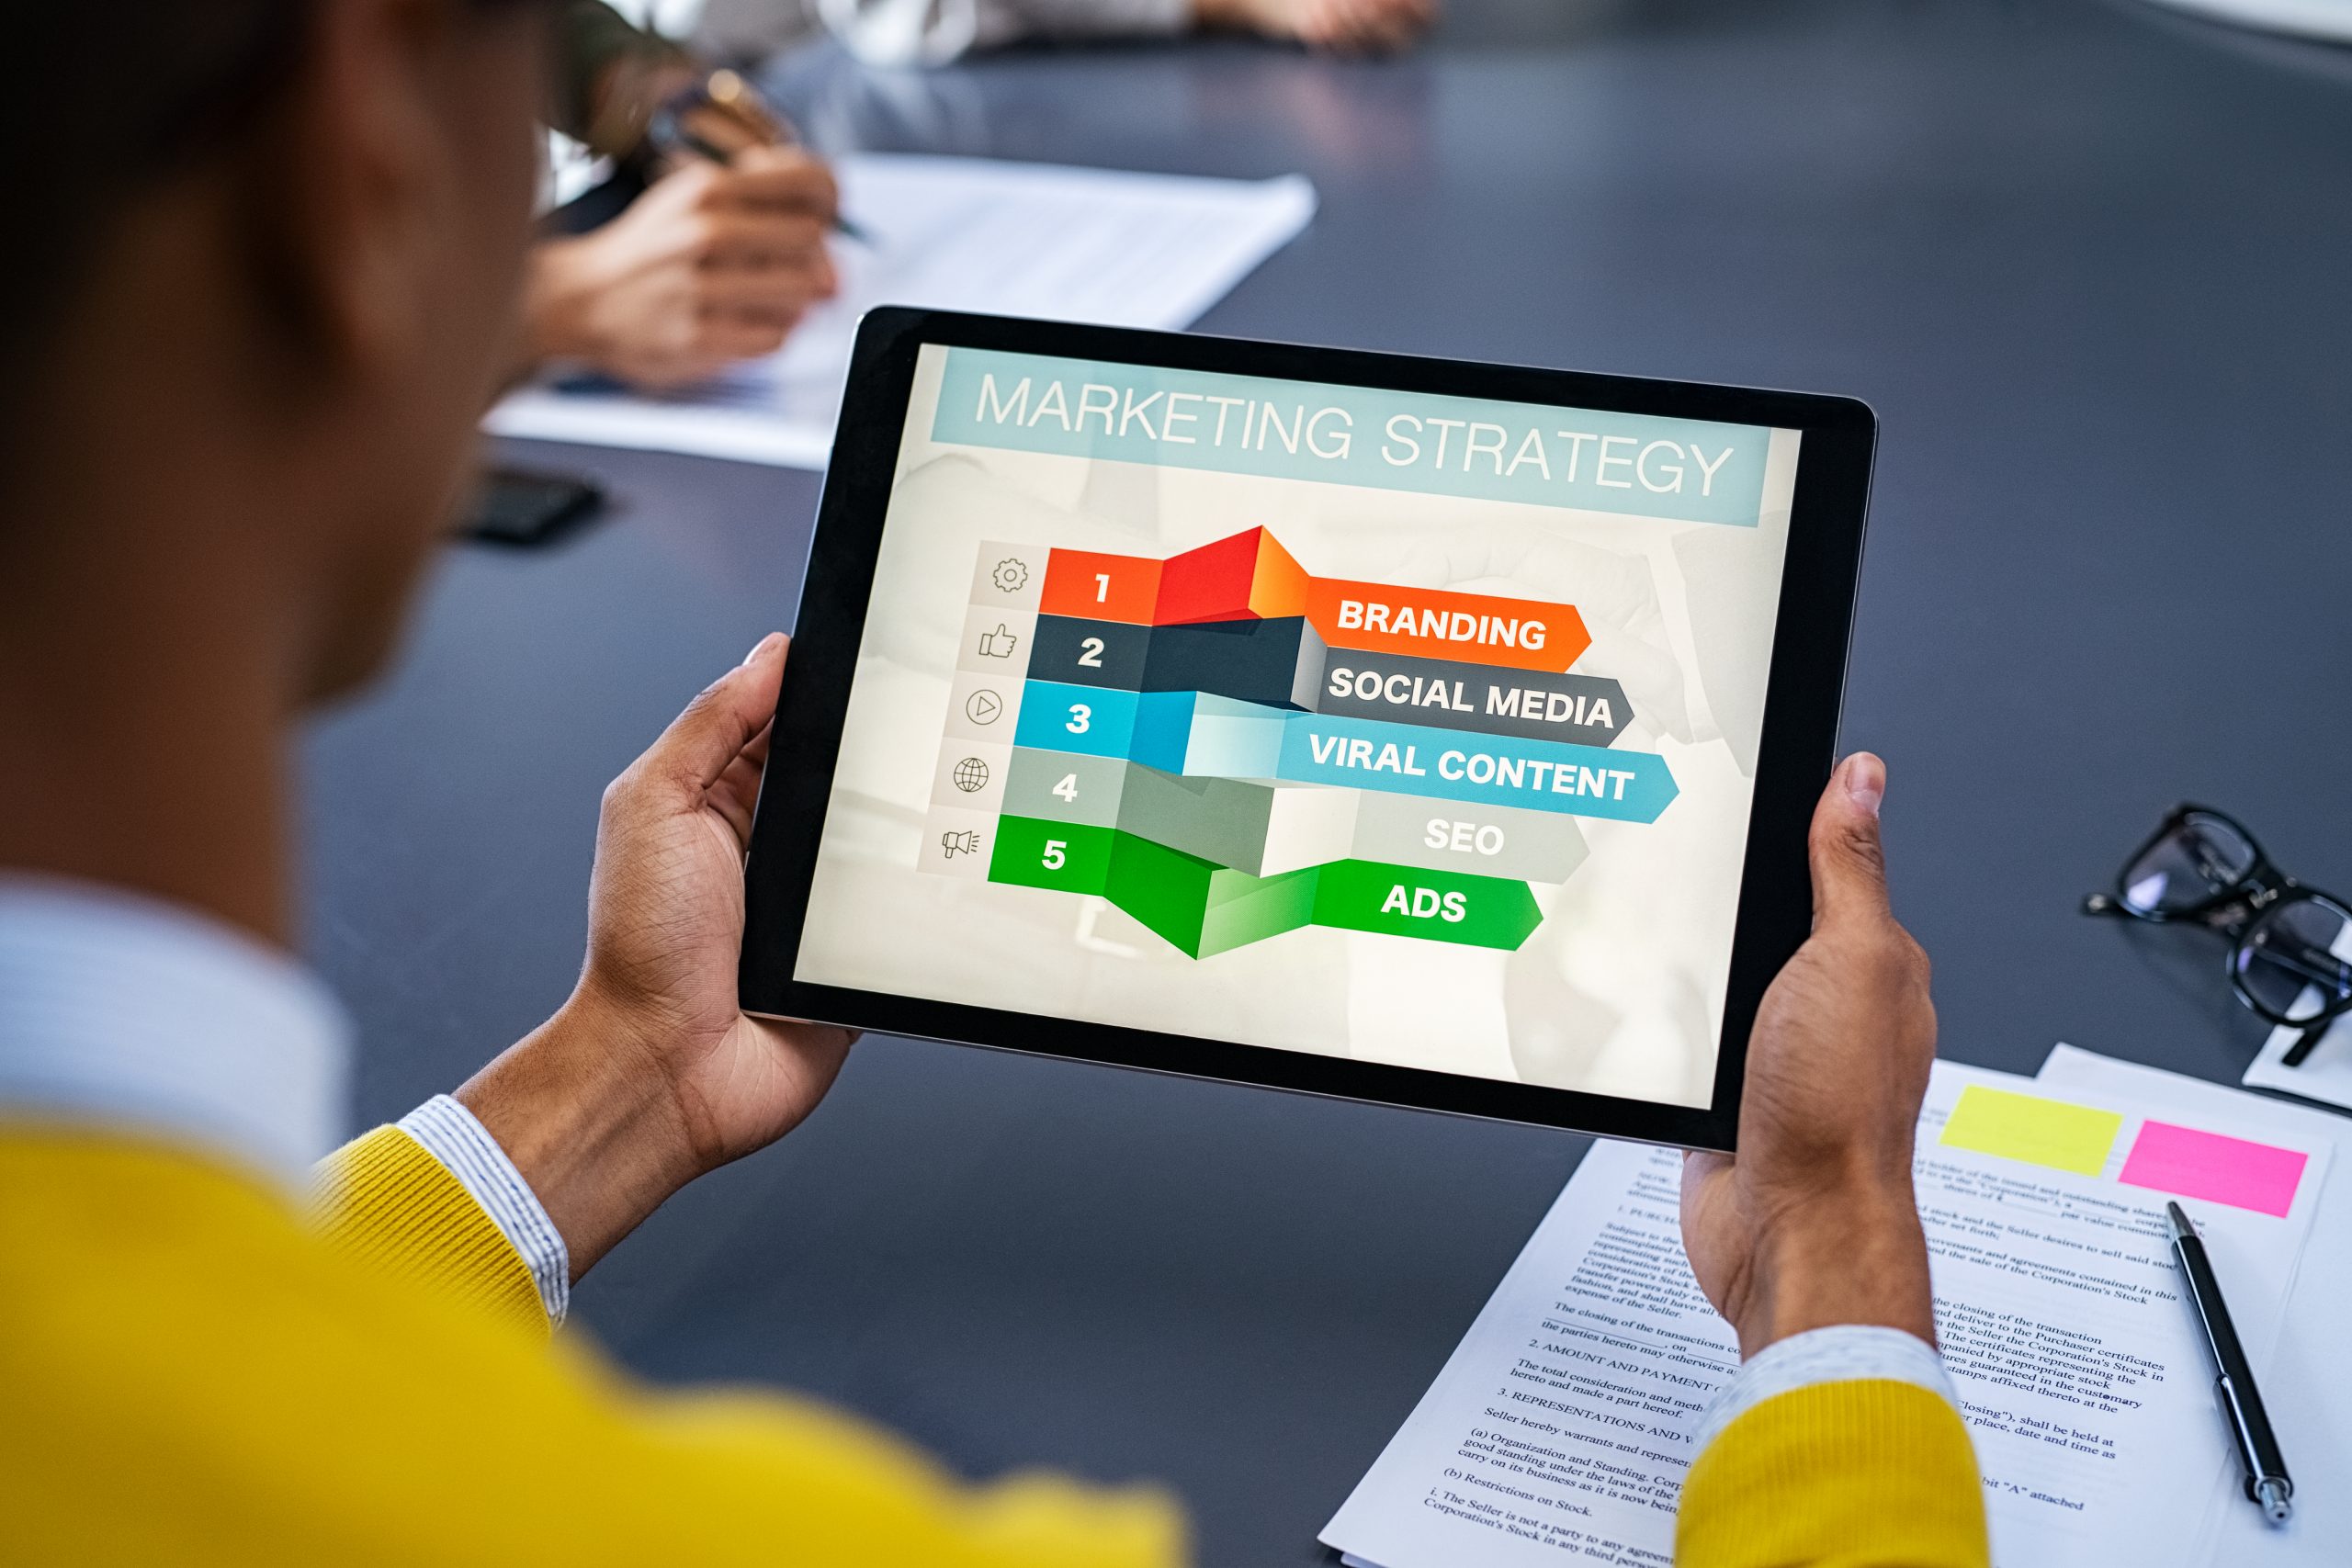 digital marketing strategy shown on tablet